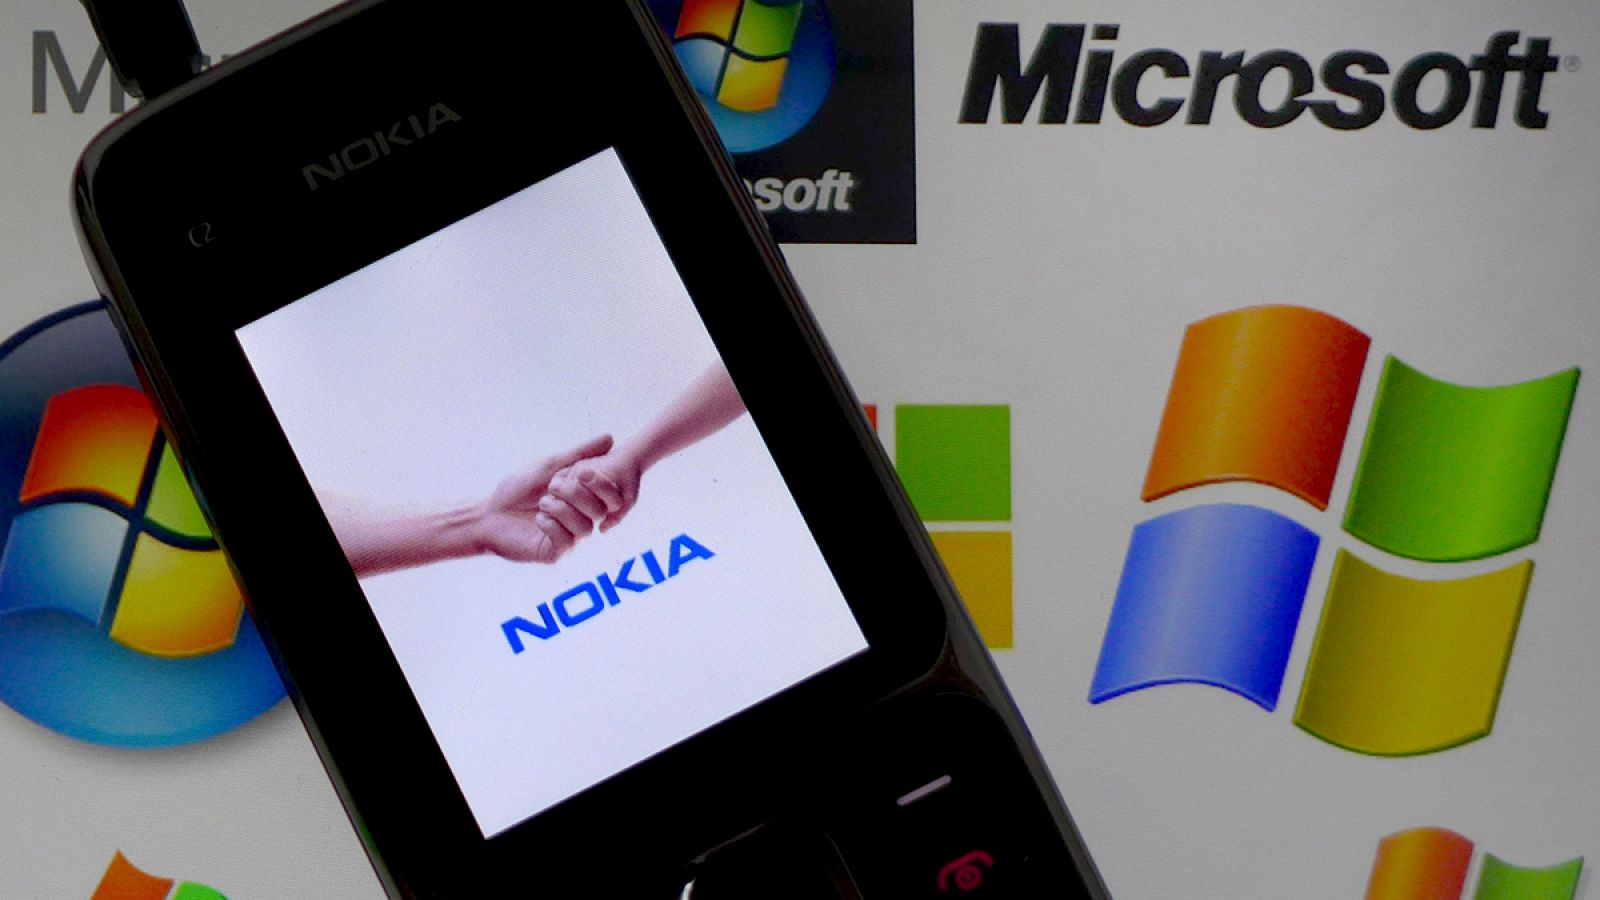 Detalle de la pantalla de un teléfono móvil de Nokia